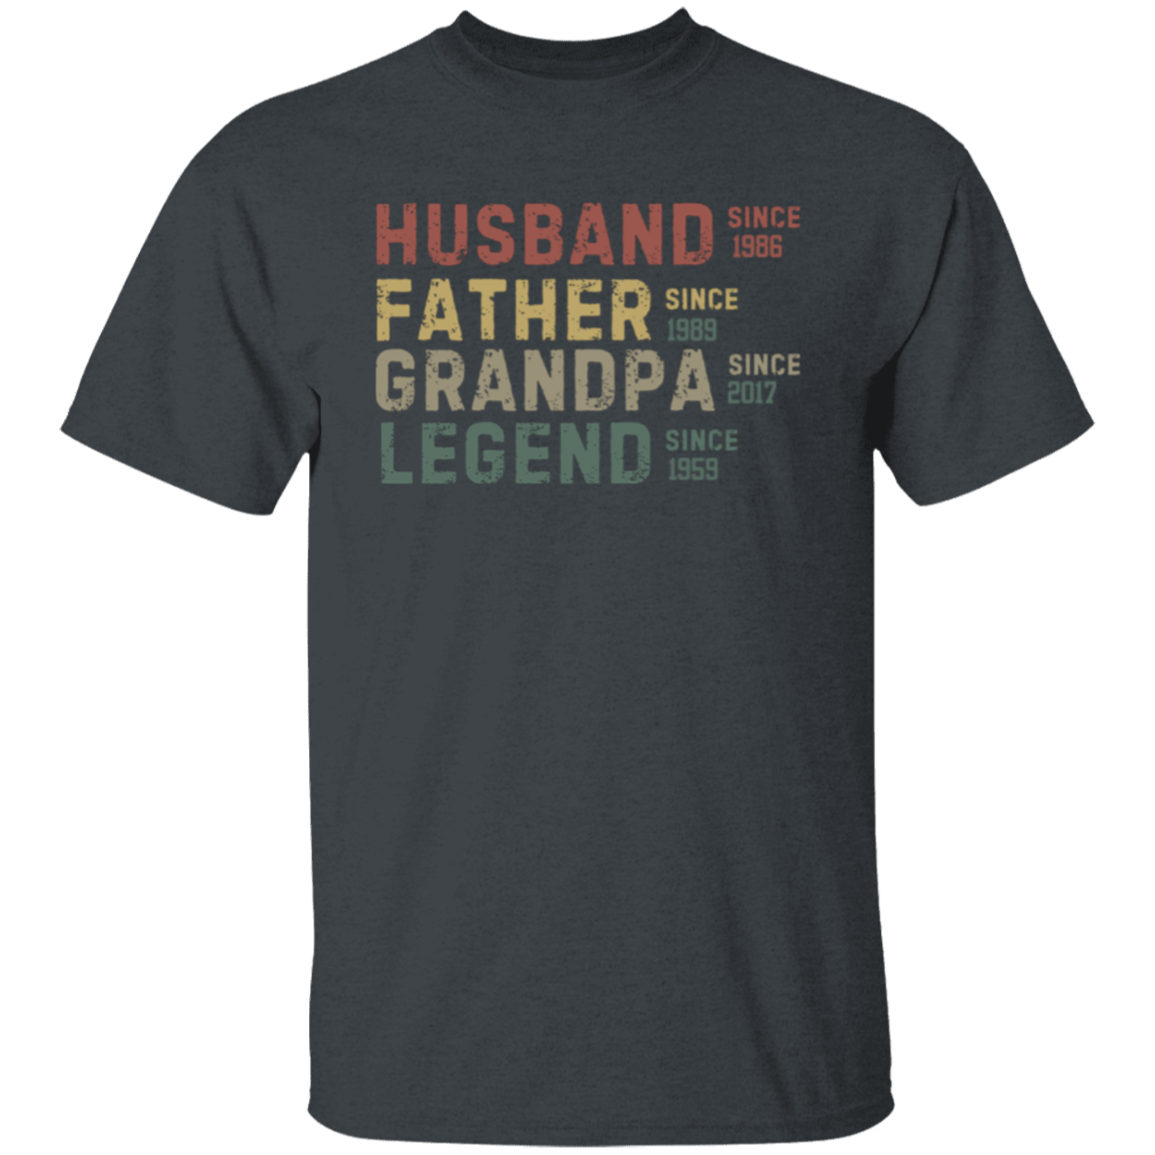 HFGL DATES HUSBAND FATHER GRANDPA LEGEND TSHIRT. T-Shirt